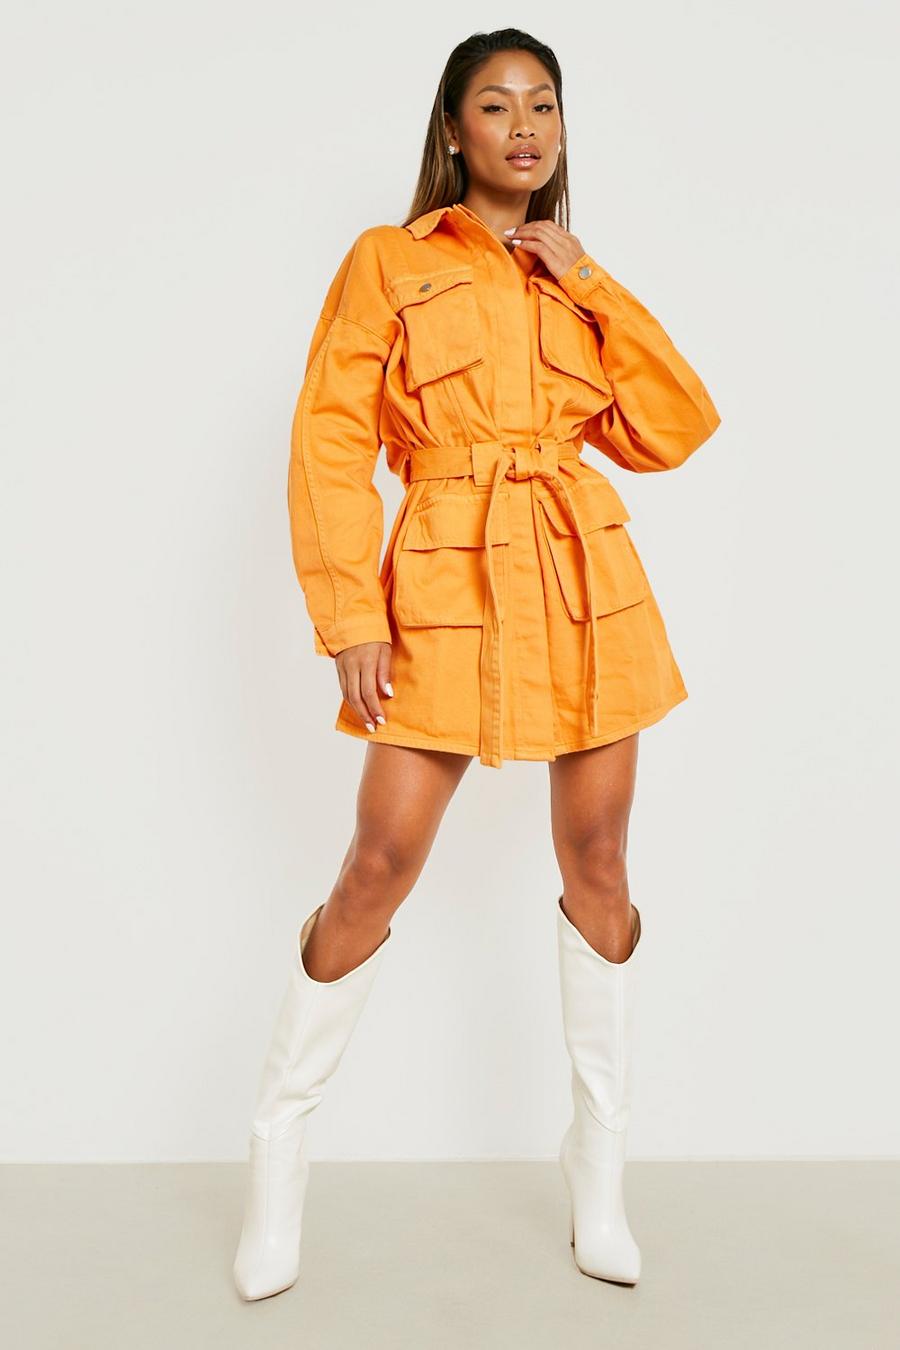 Megan Fox - Vestito Shacket Premium con tasche Utility, Orange arancio